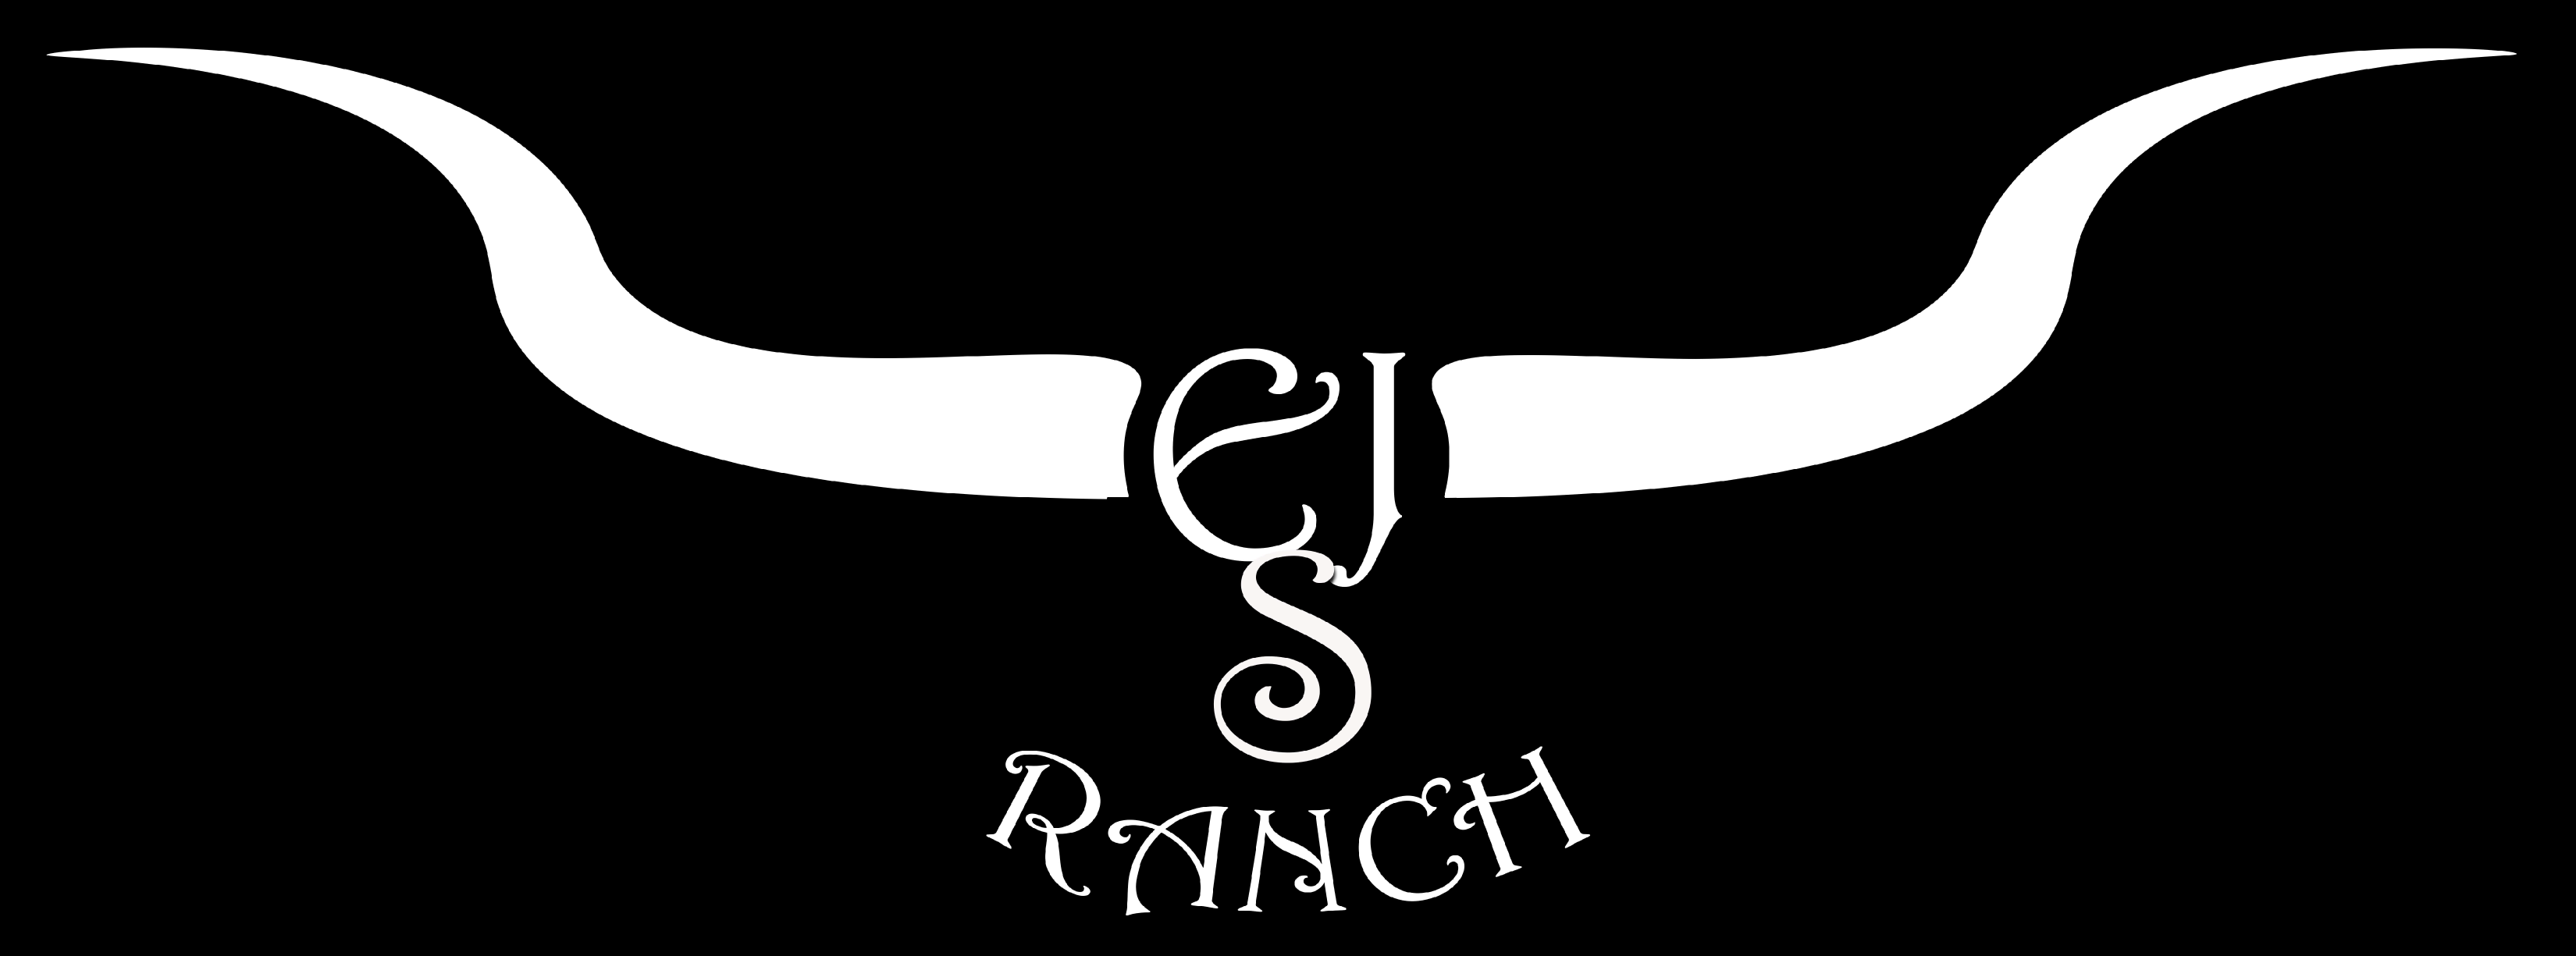 EJS Ranch logo